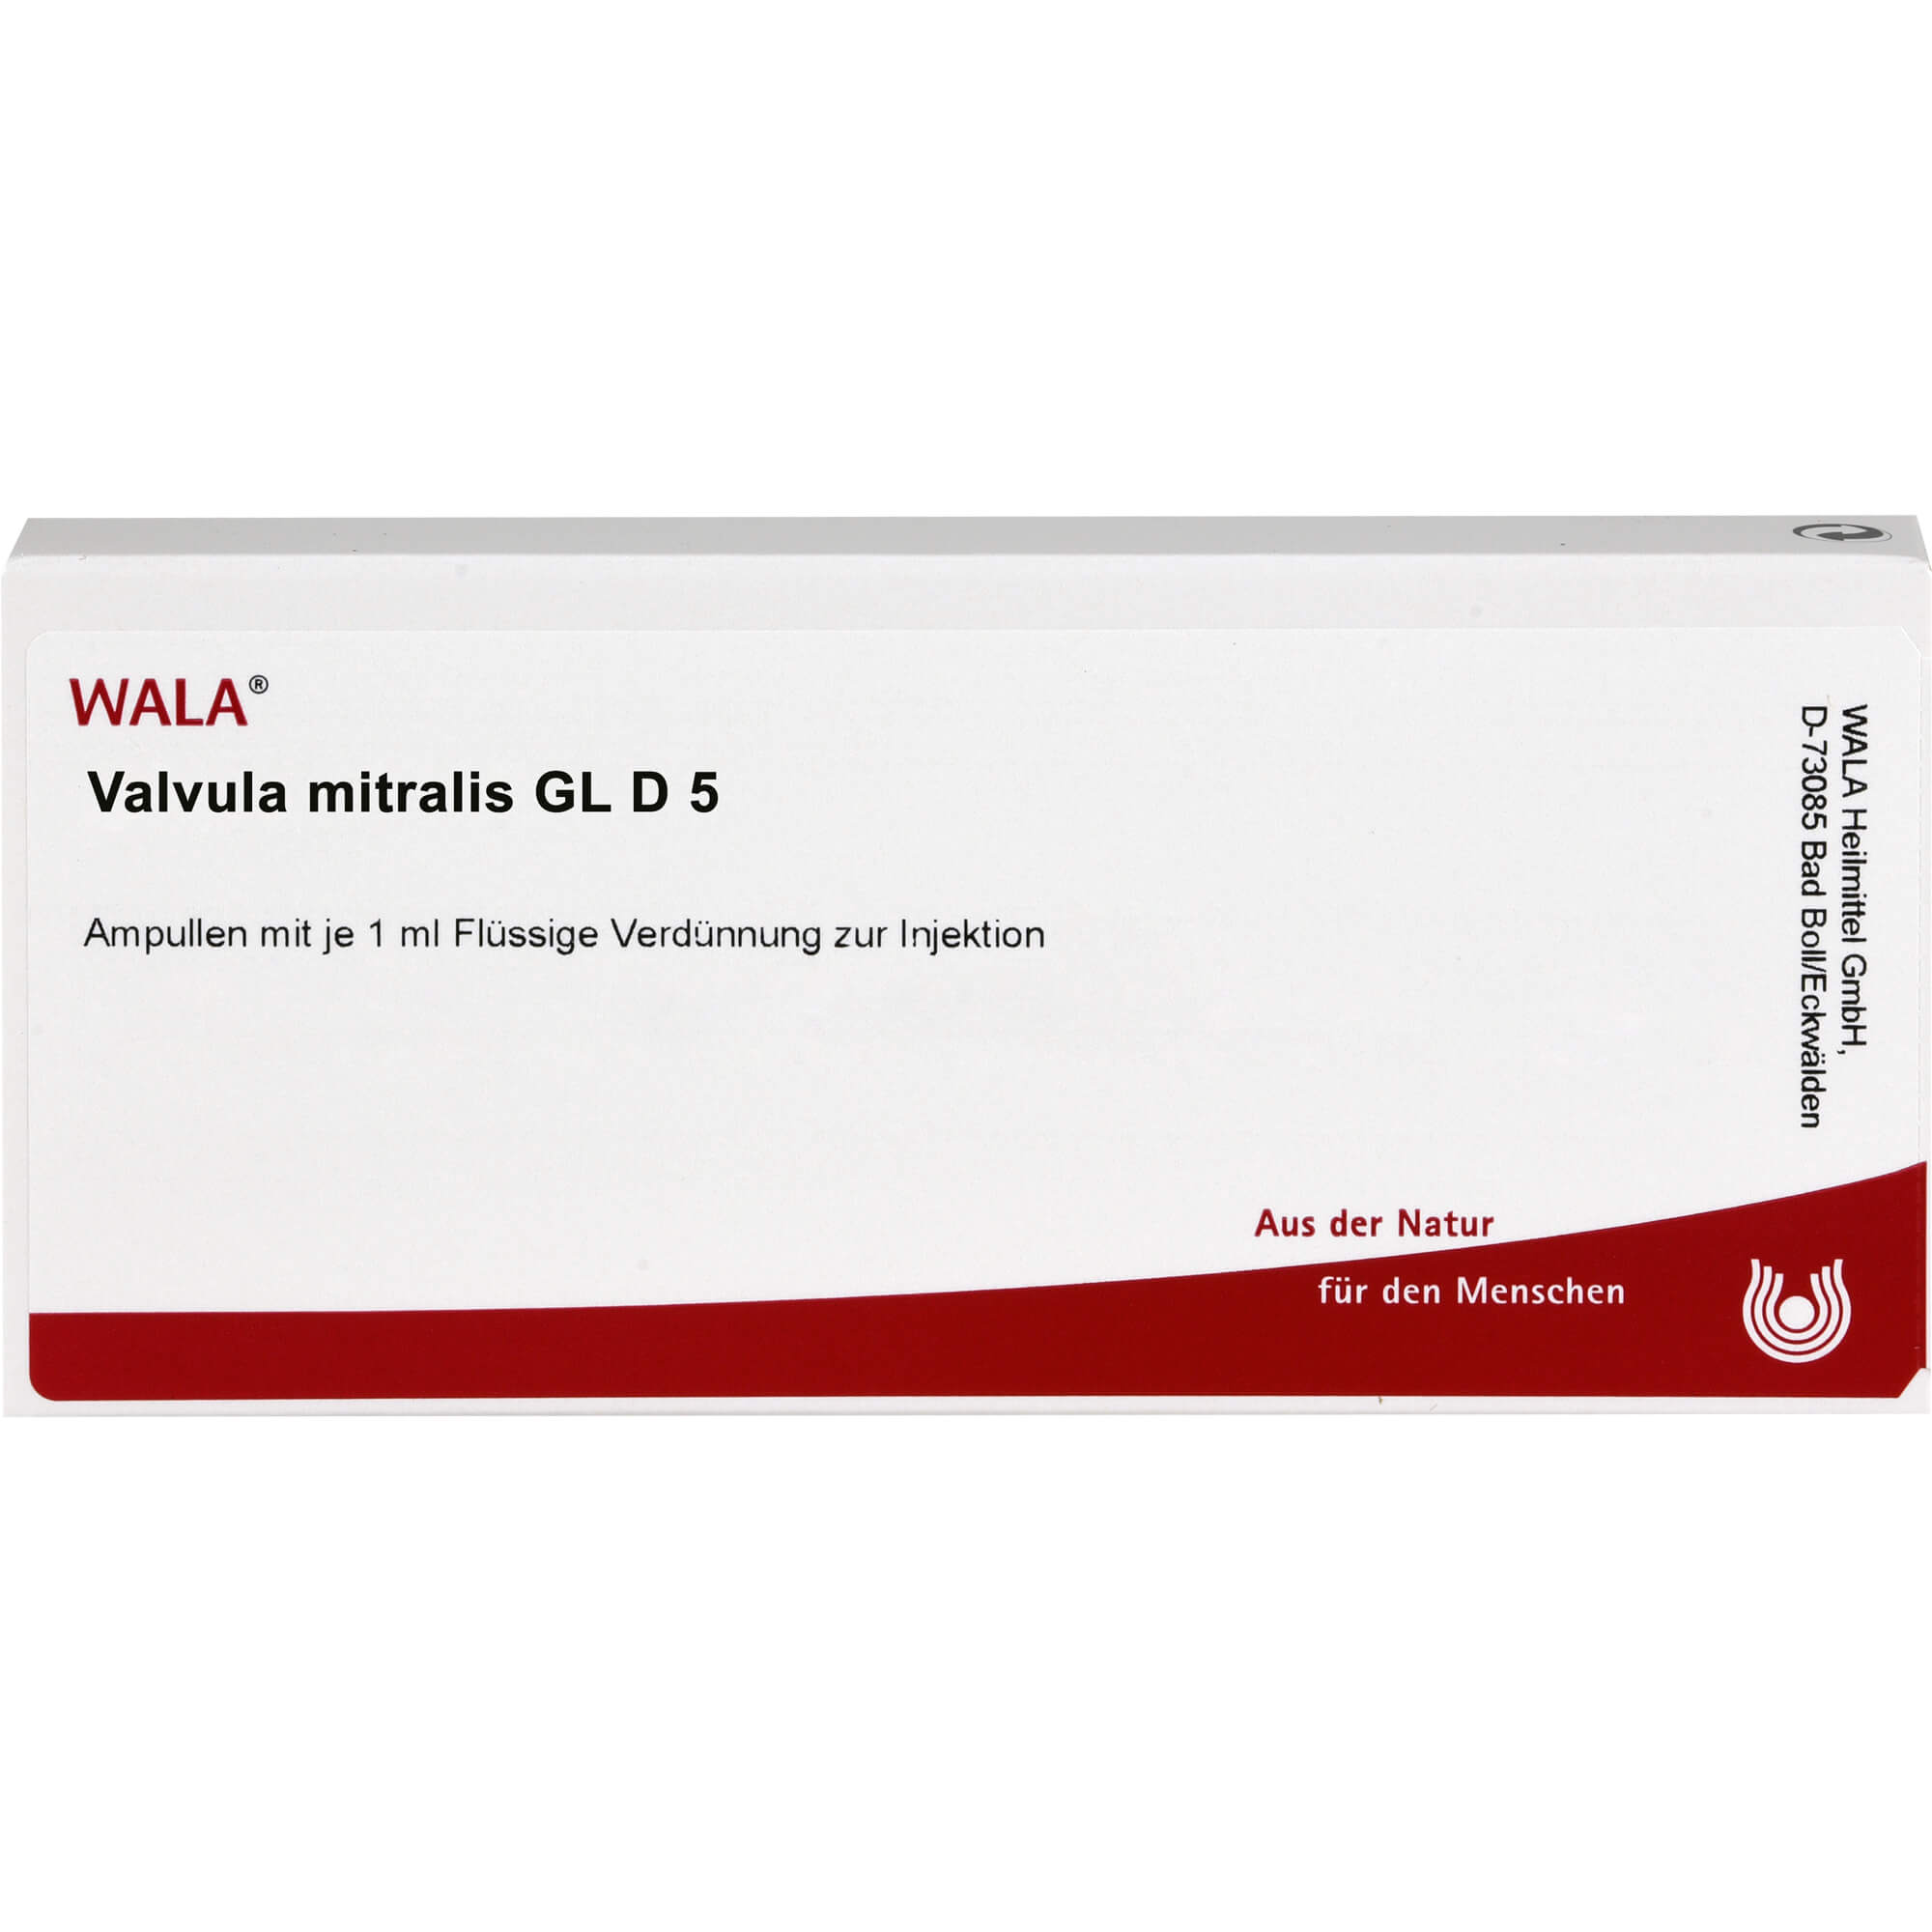 VALVULA mitralis GL D 5 Ampullen